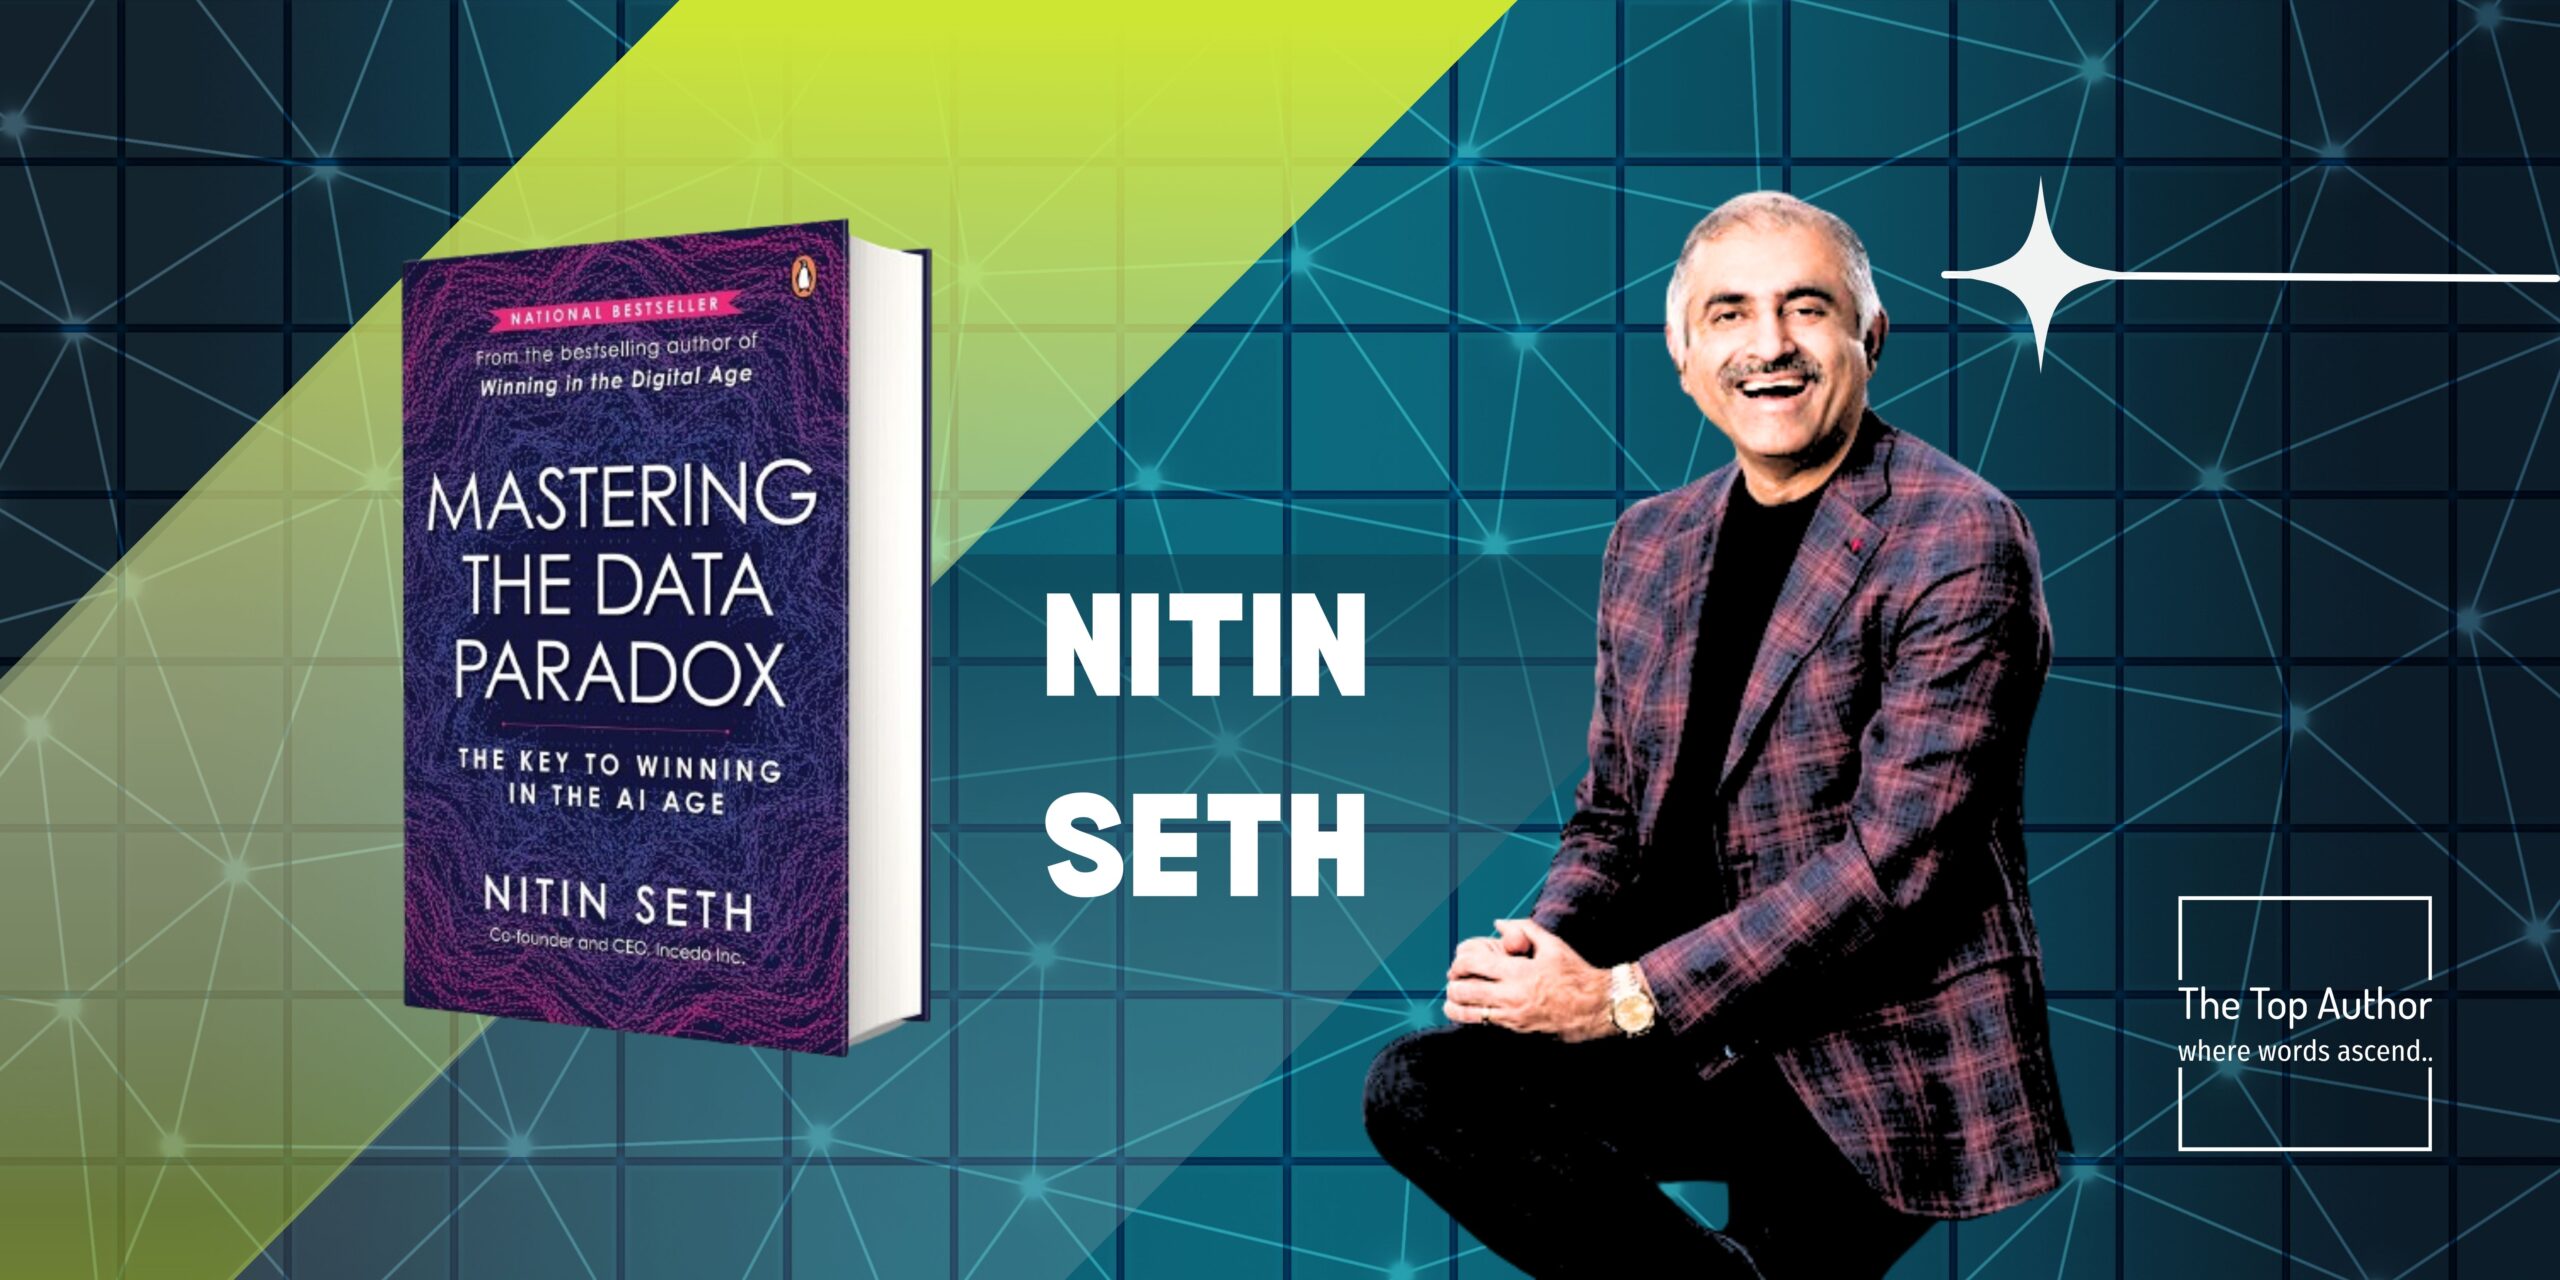 The Top Author - Nitin Seth